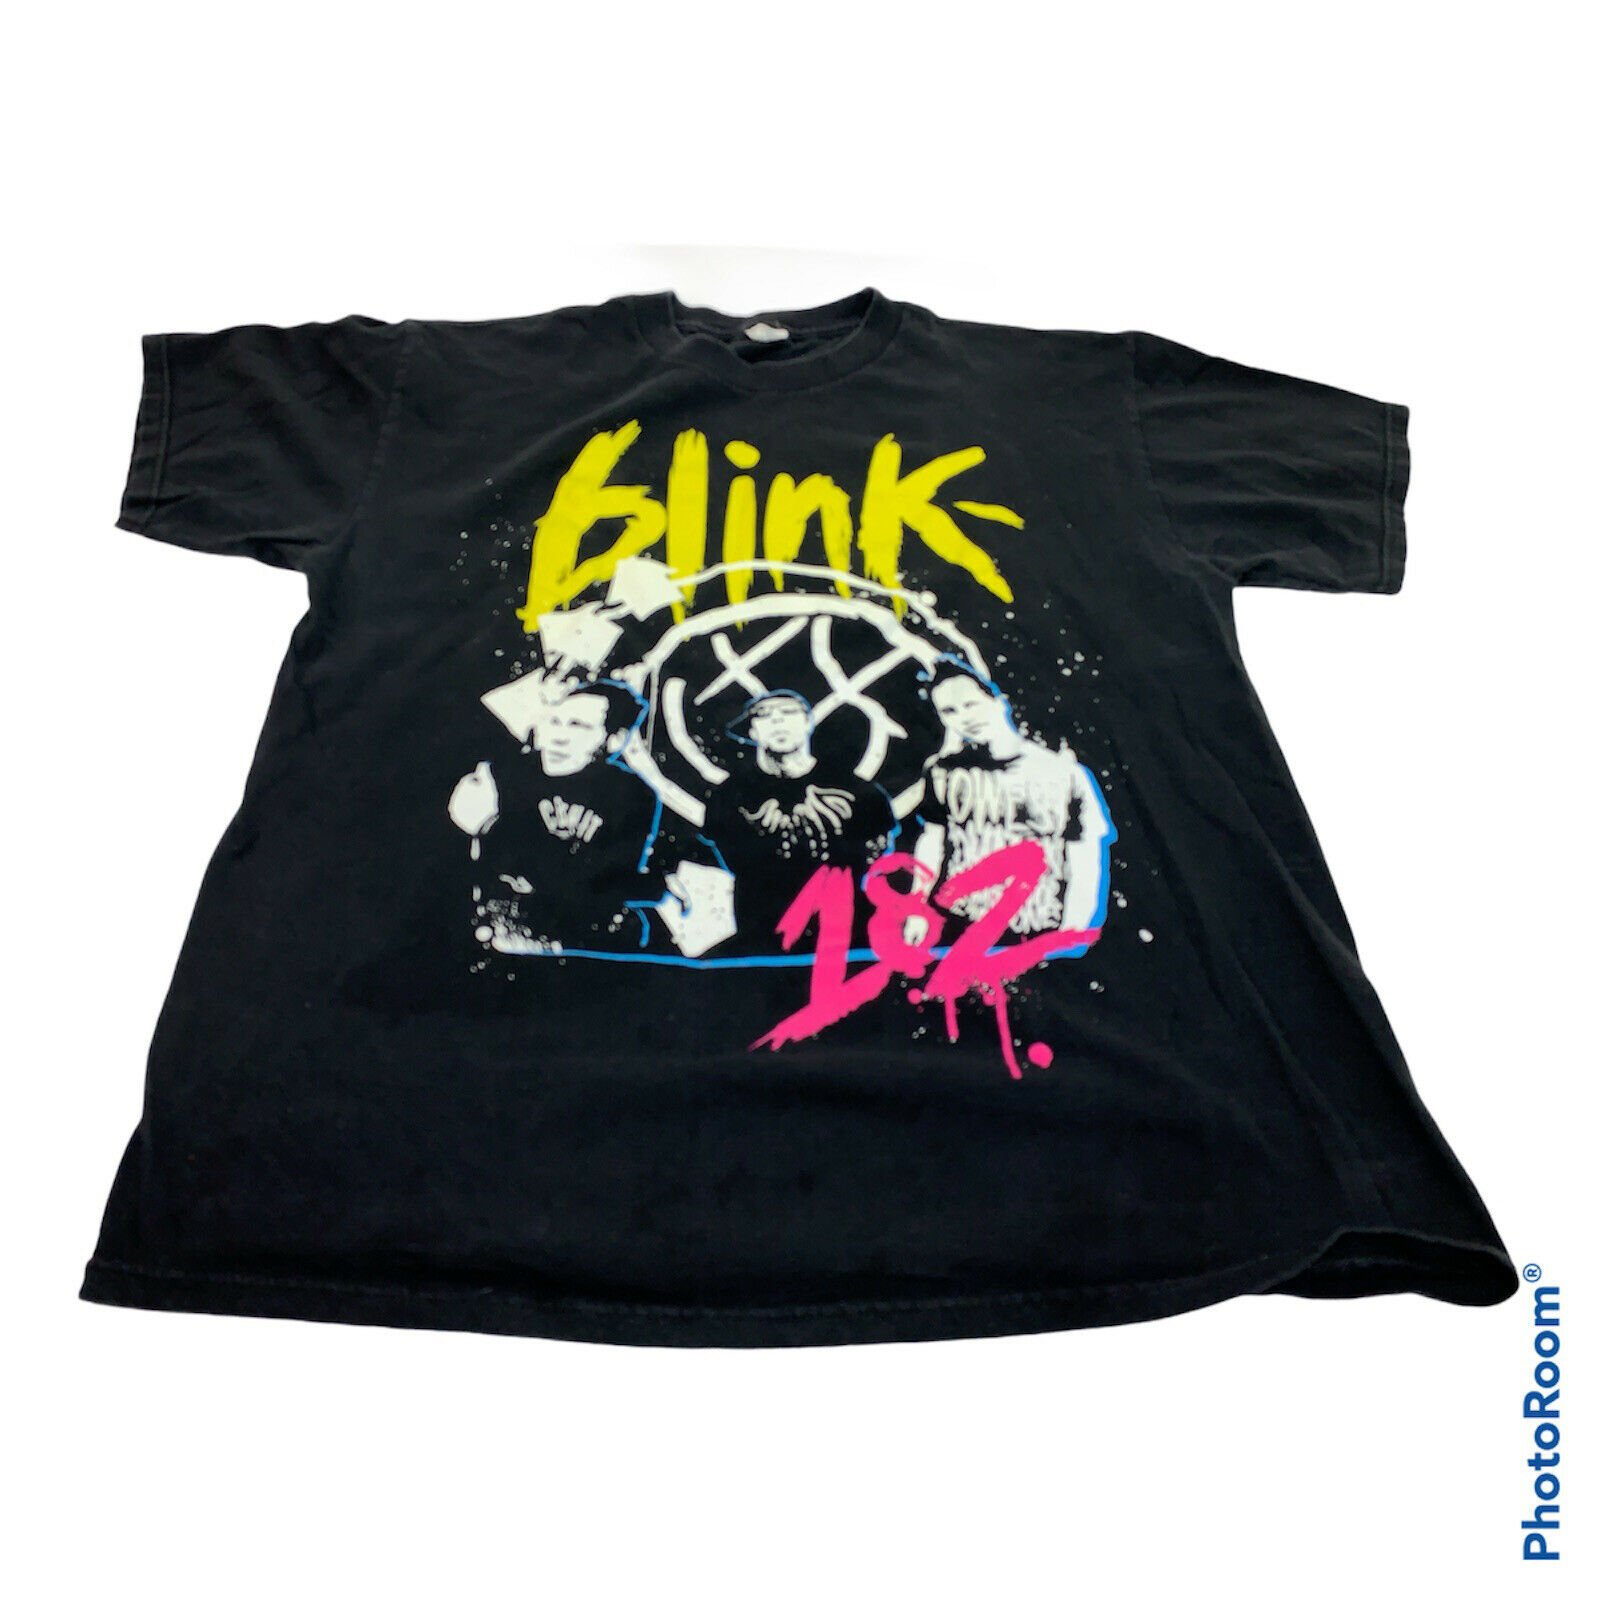 Blink 182 Summer 2009 Concert Tour Shirt Large Black Rock Punk Pop